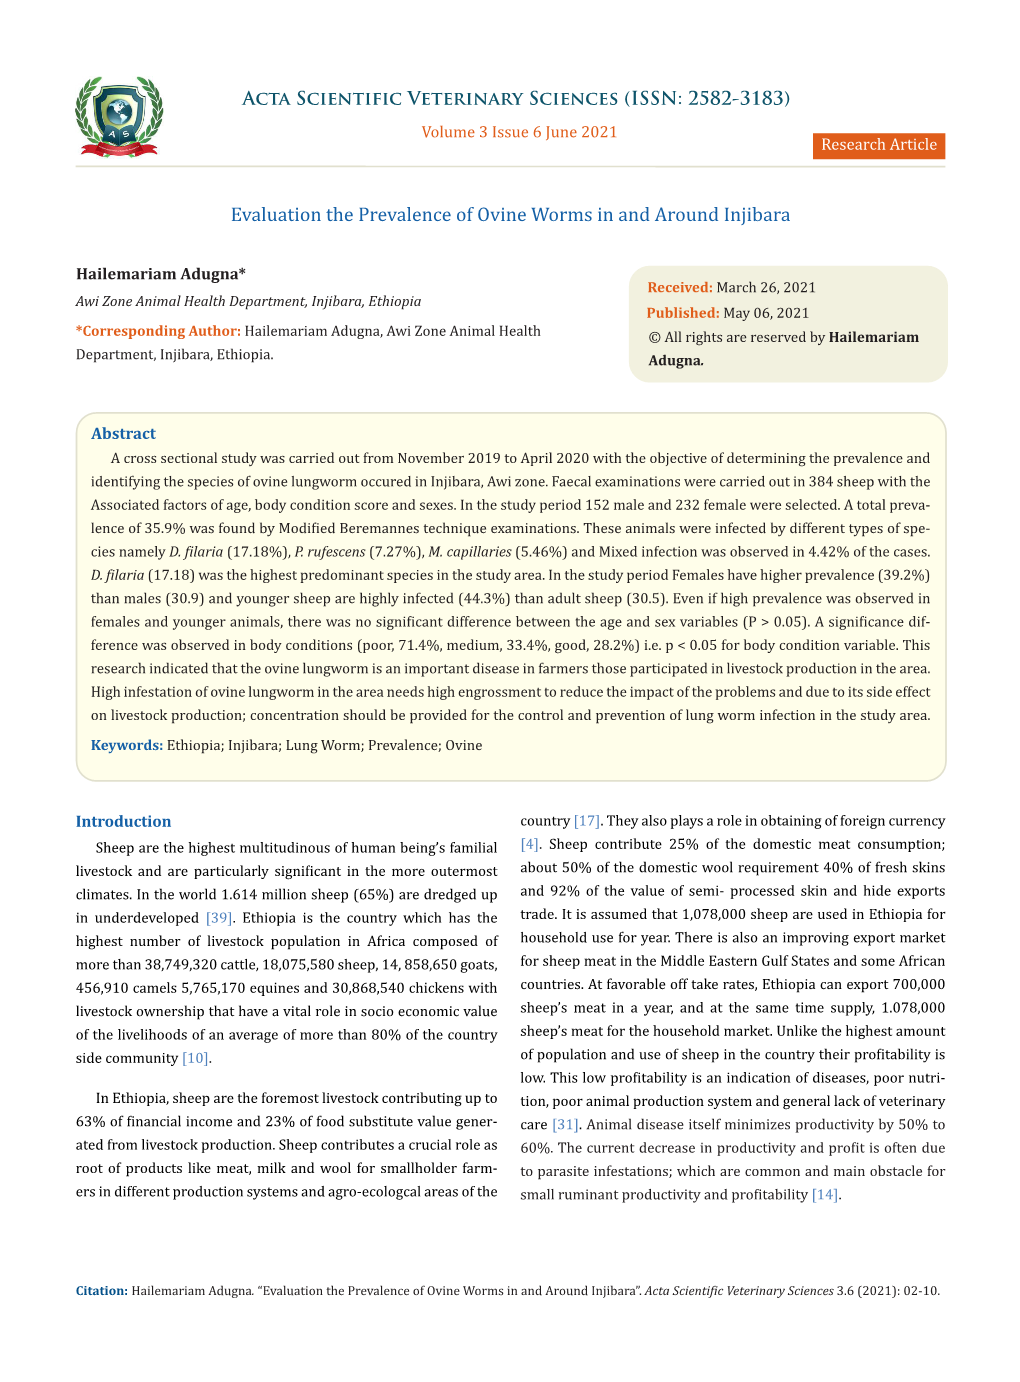 Evaluation the Prevalence of Ovine Worms in and Around Injibara